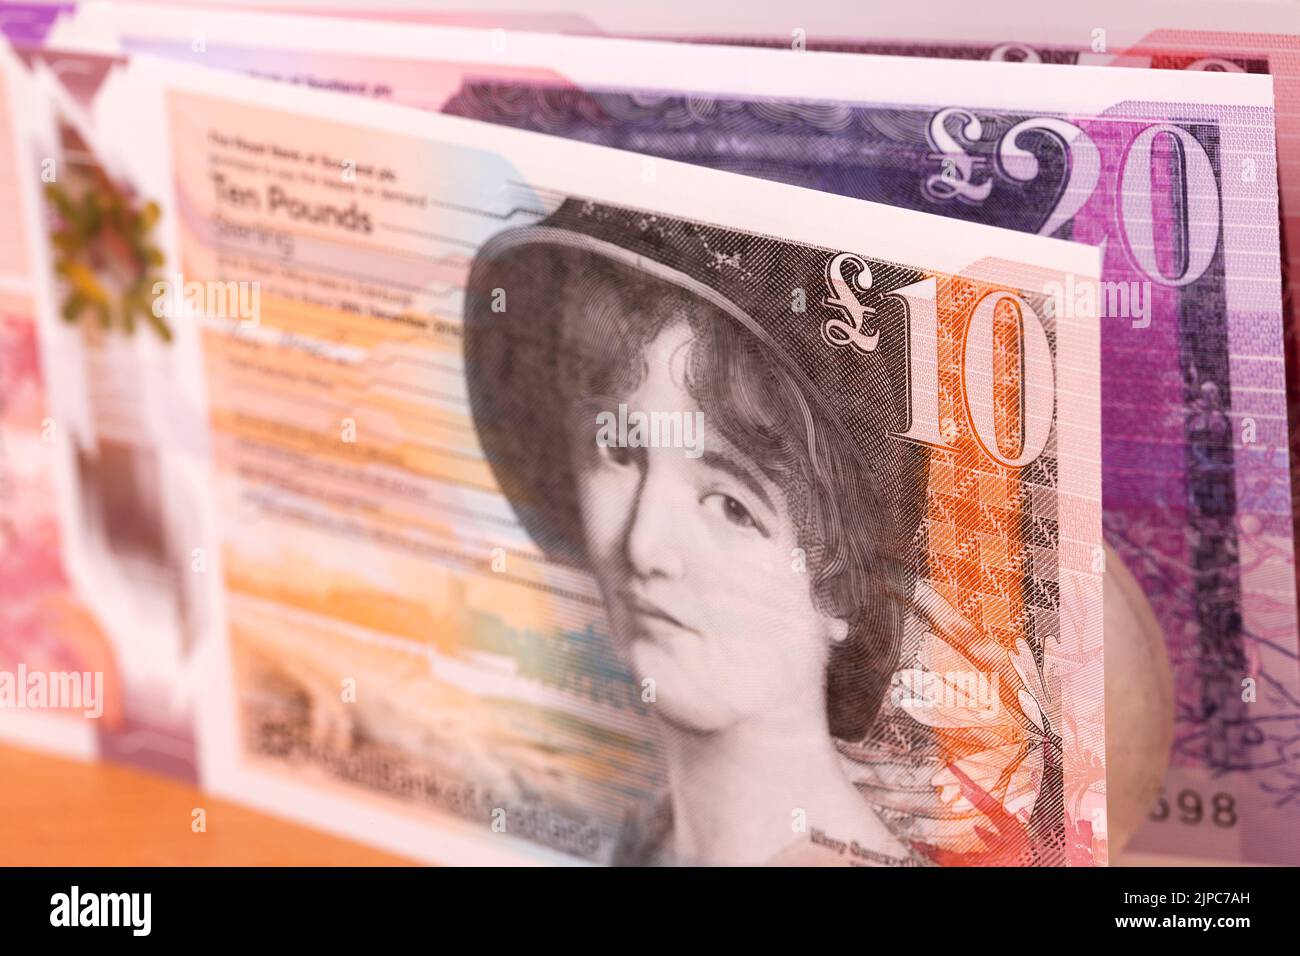 Scottish money - Pounds a business background Stock Photo